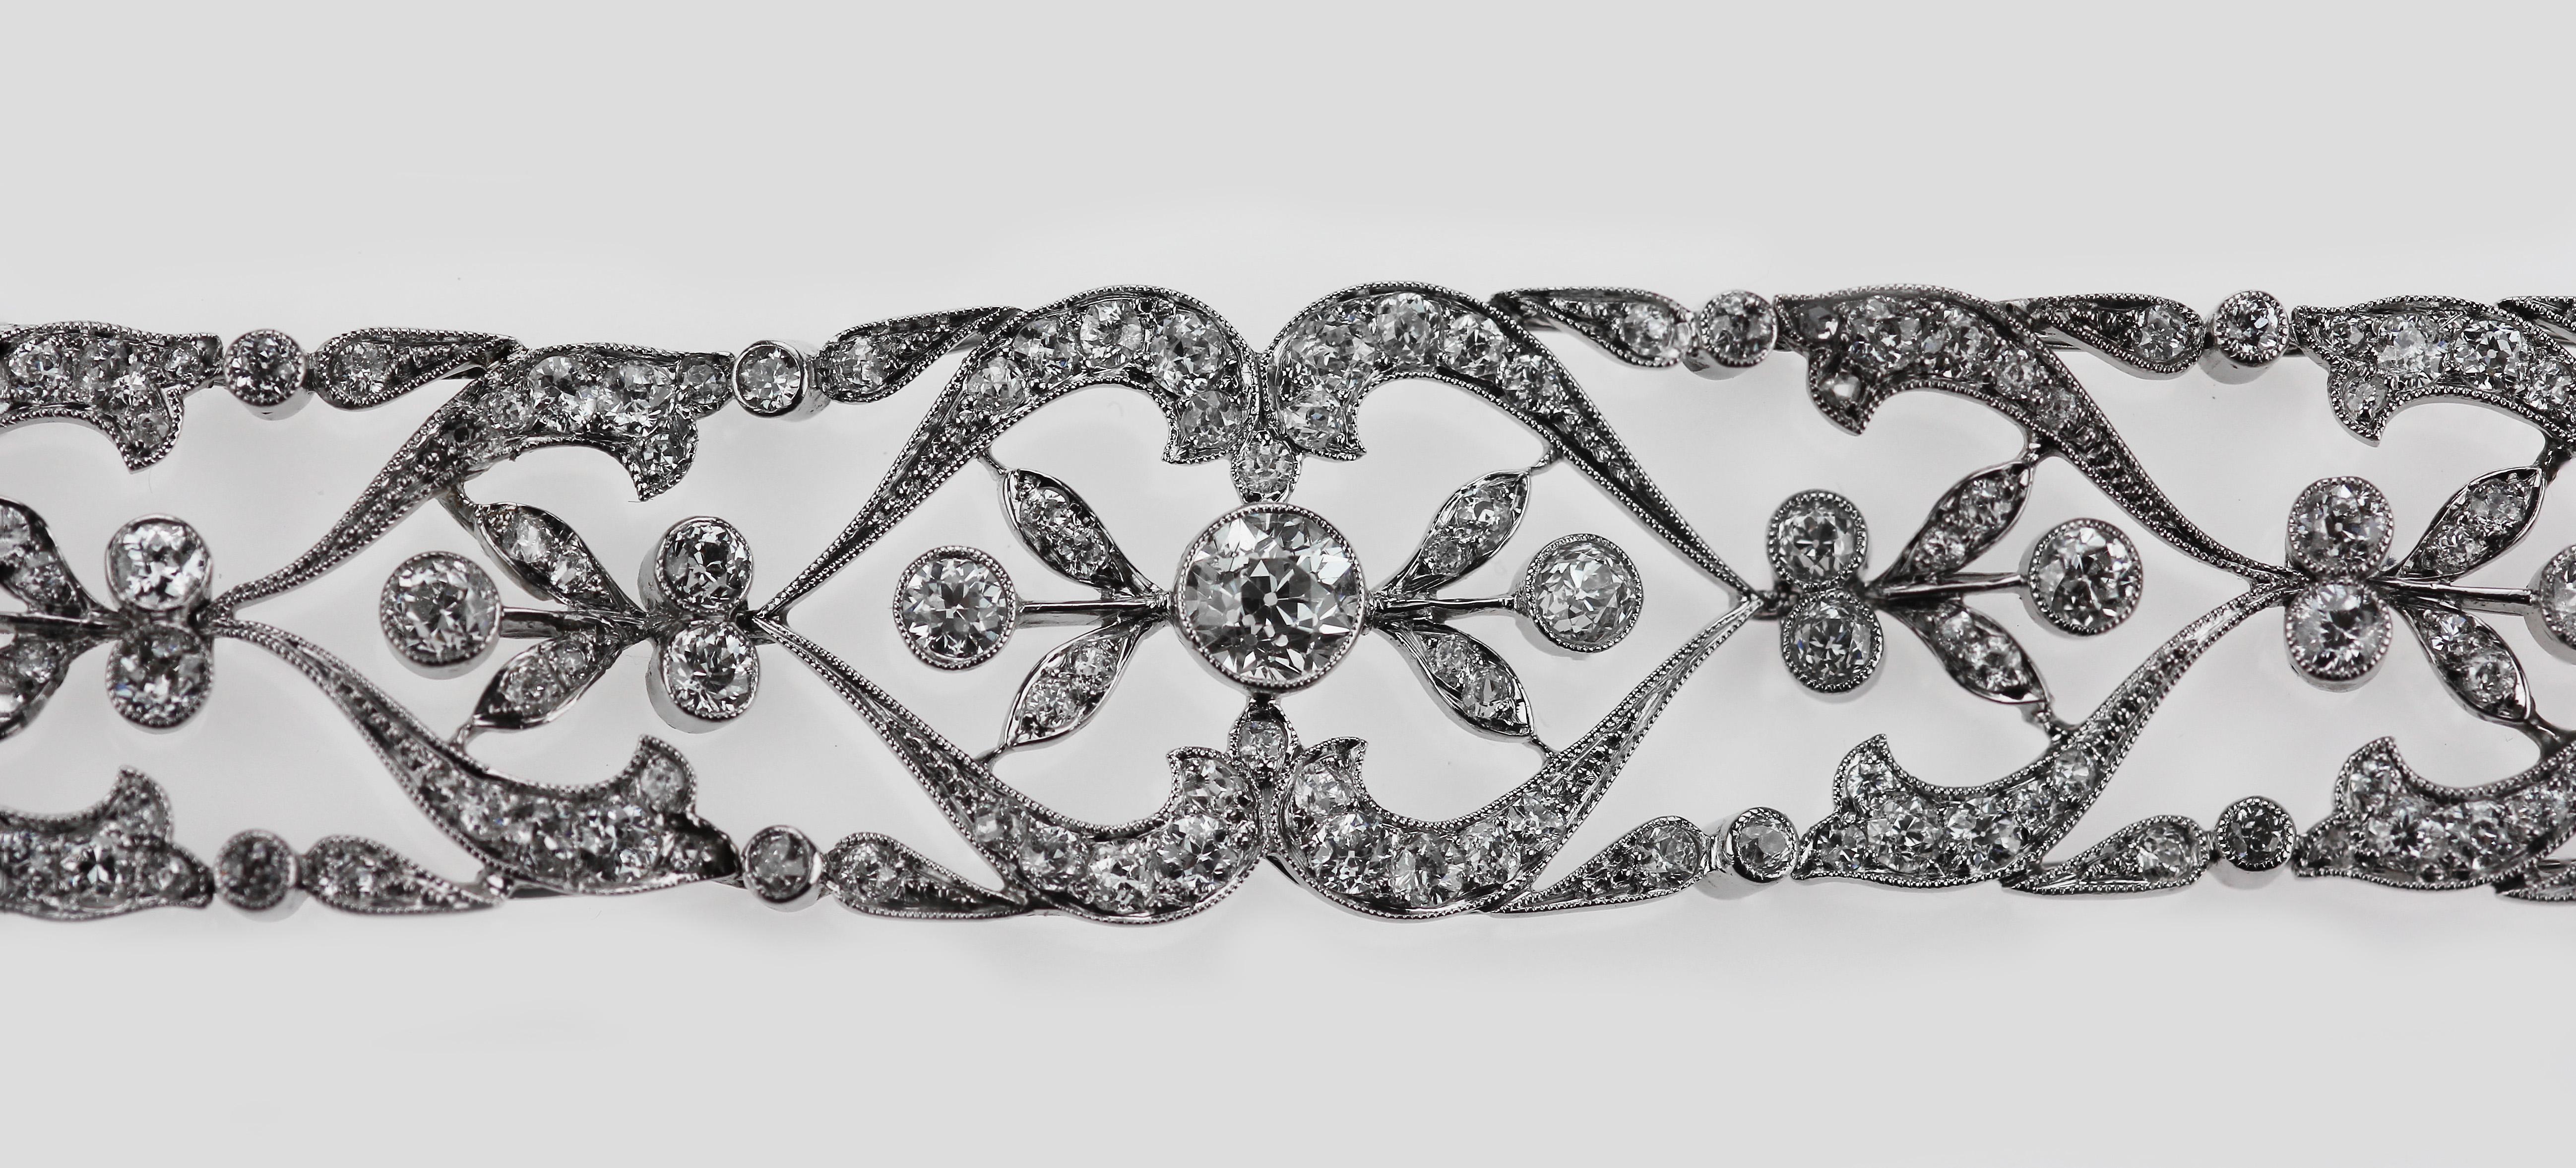 Antique Edwardian Old European Cut Diamond Bracelet in Platinum, Lace Design (Rundschliff)